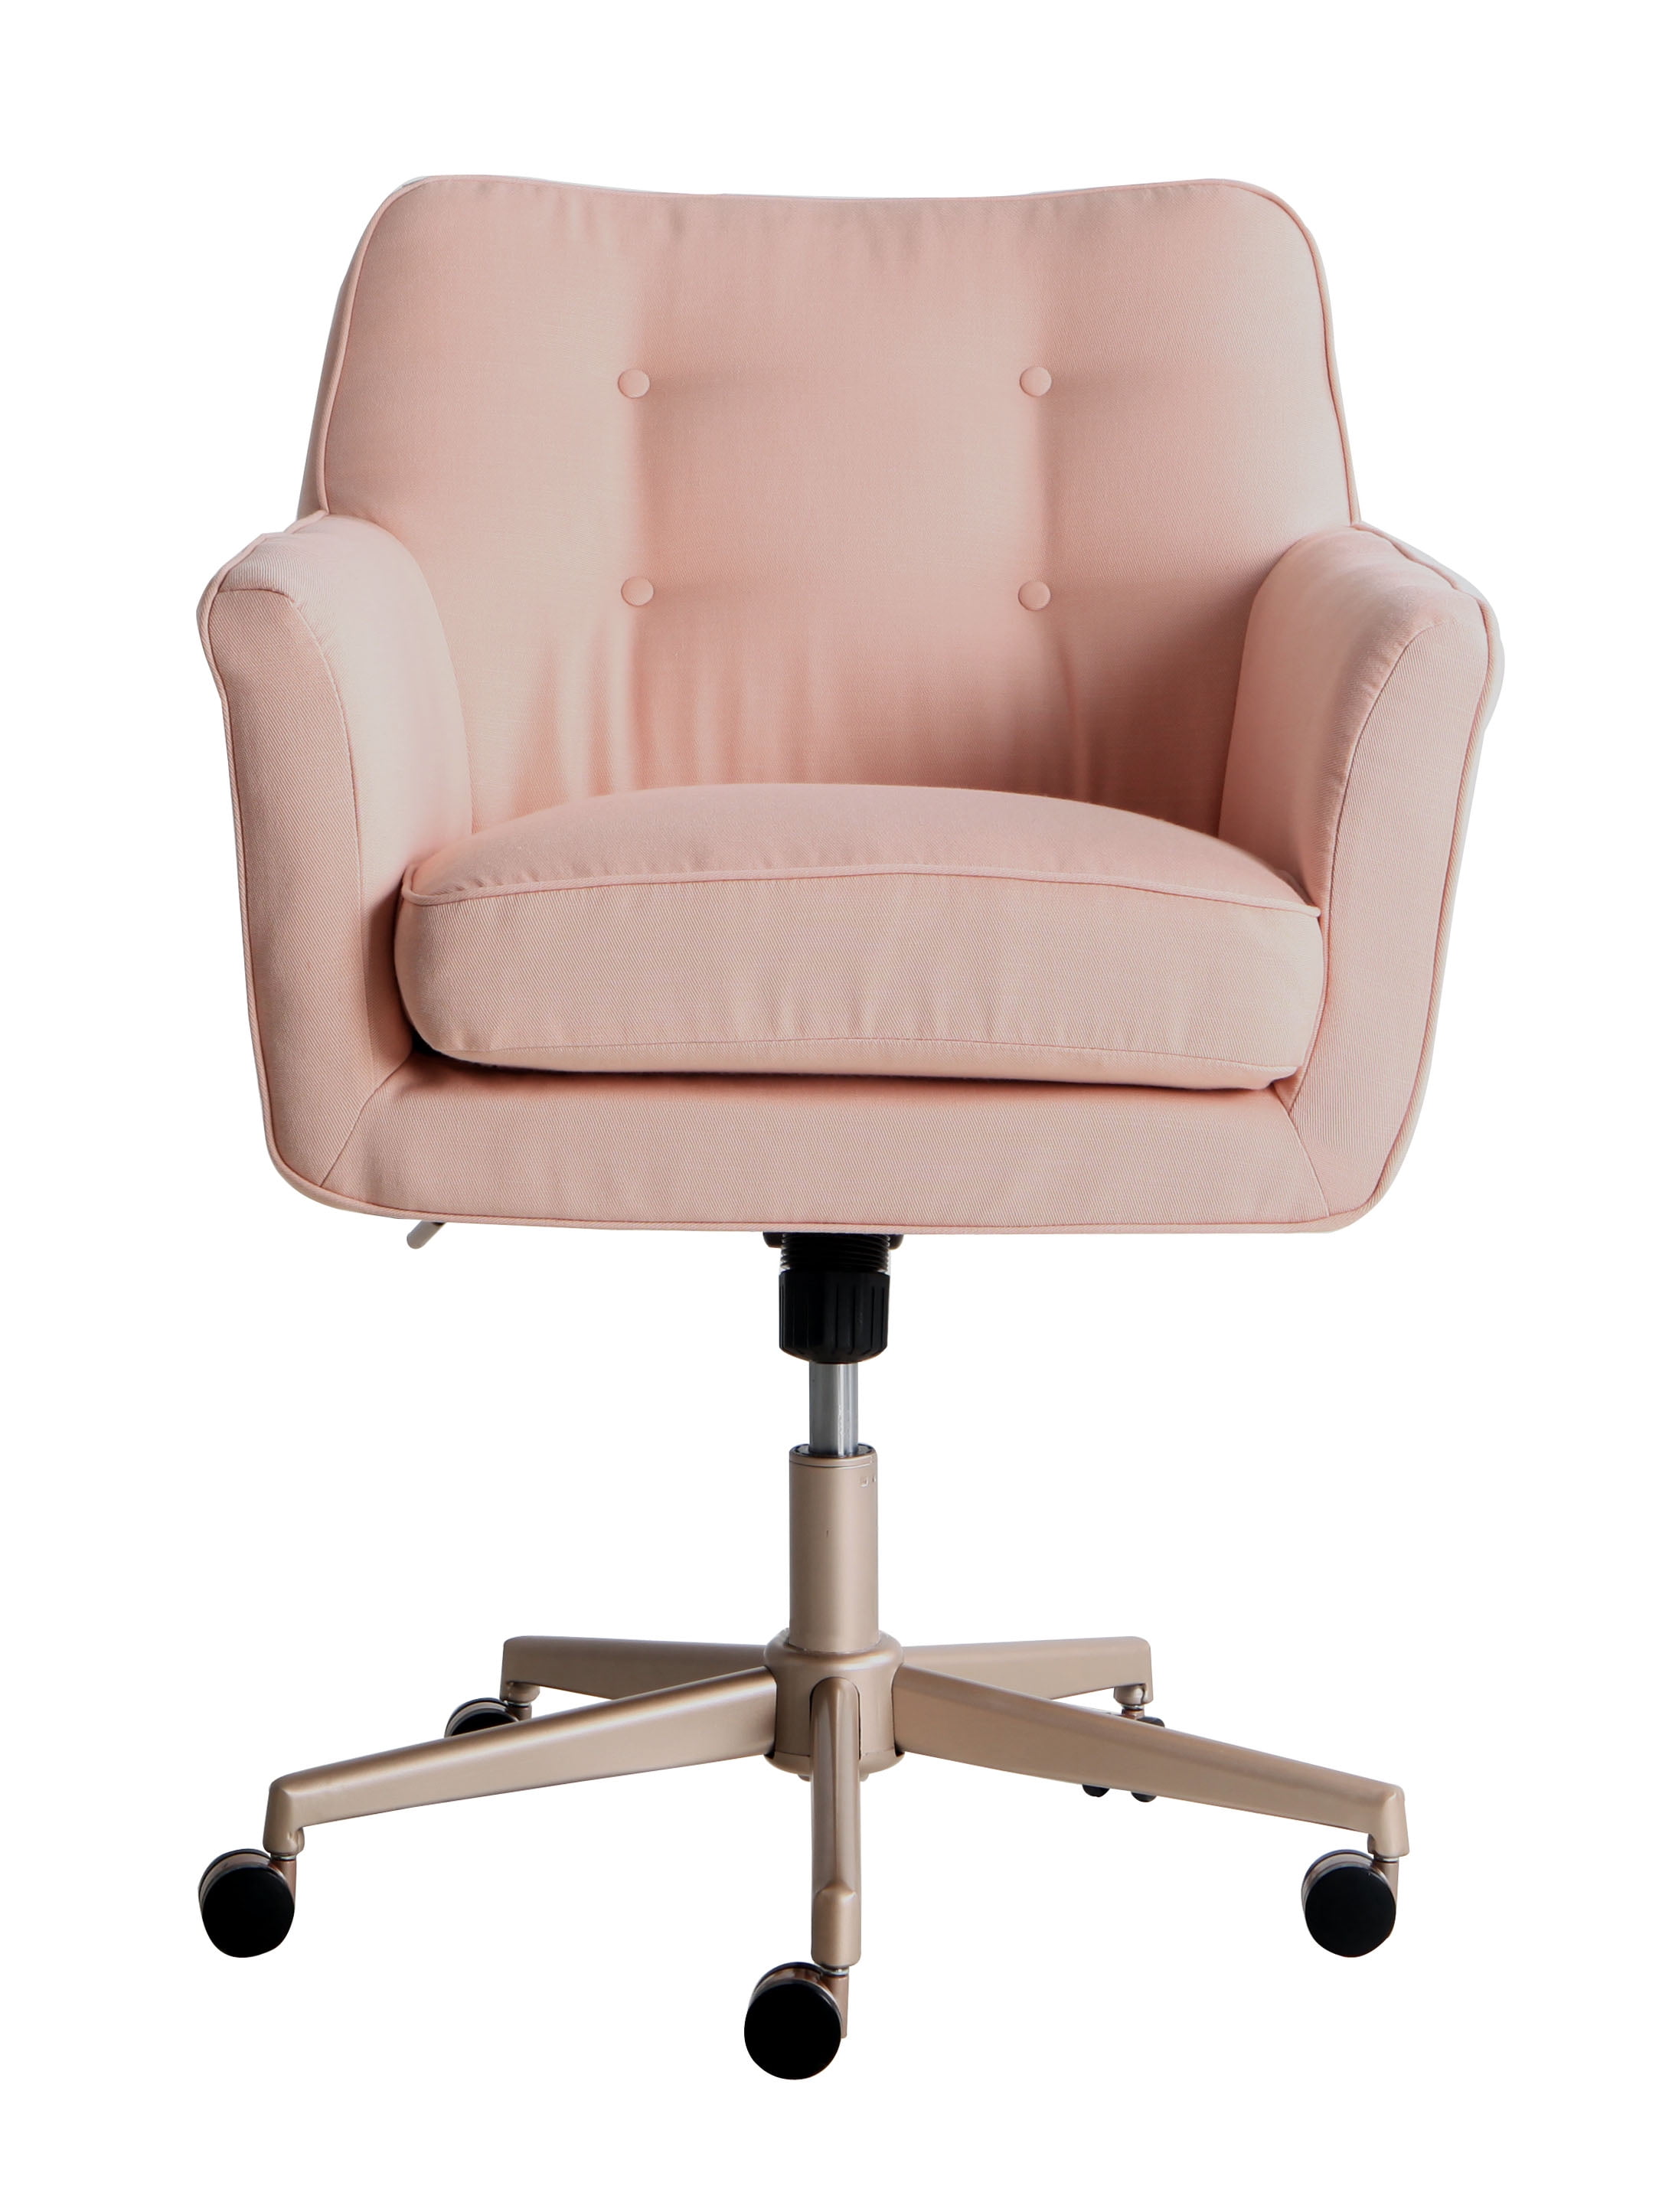 serta style ashland home office chair blush pink twill fabric